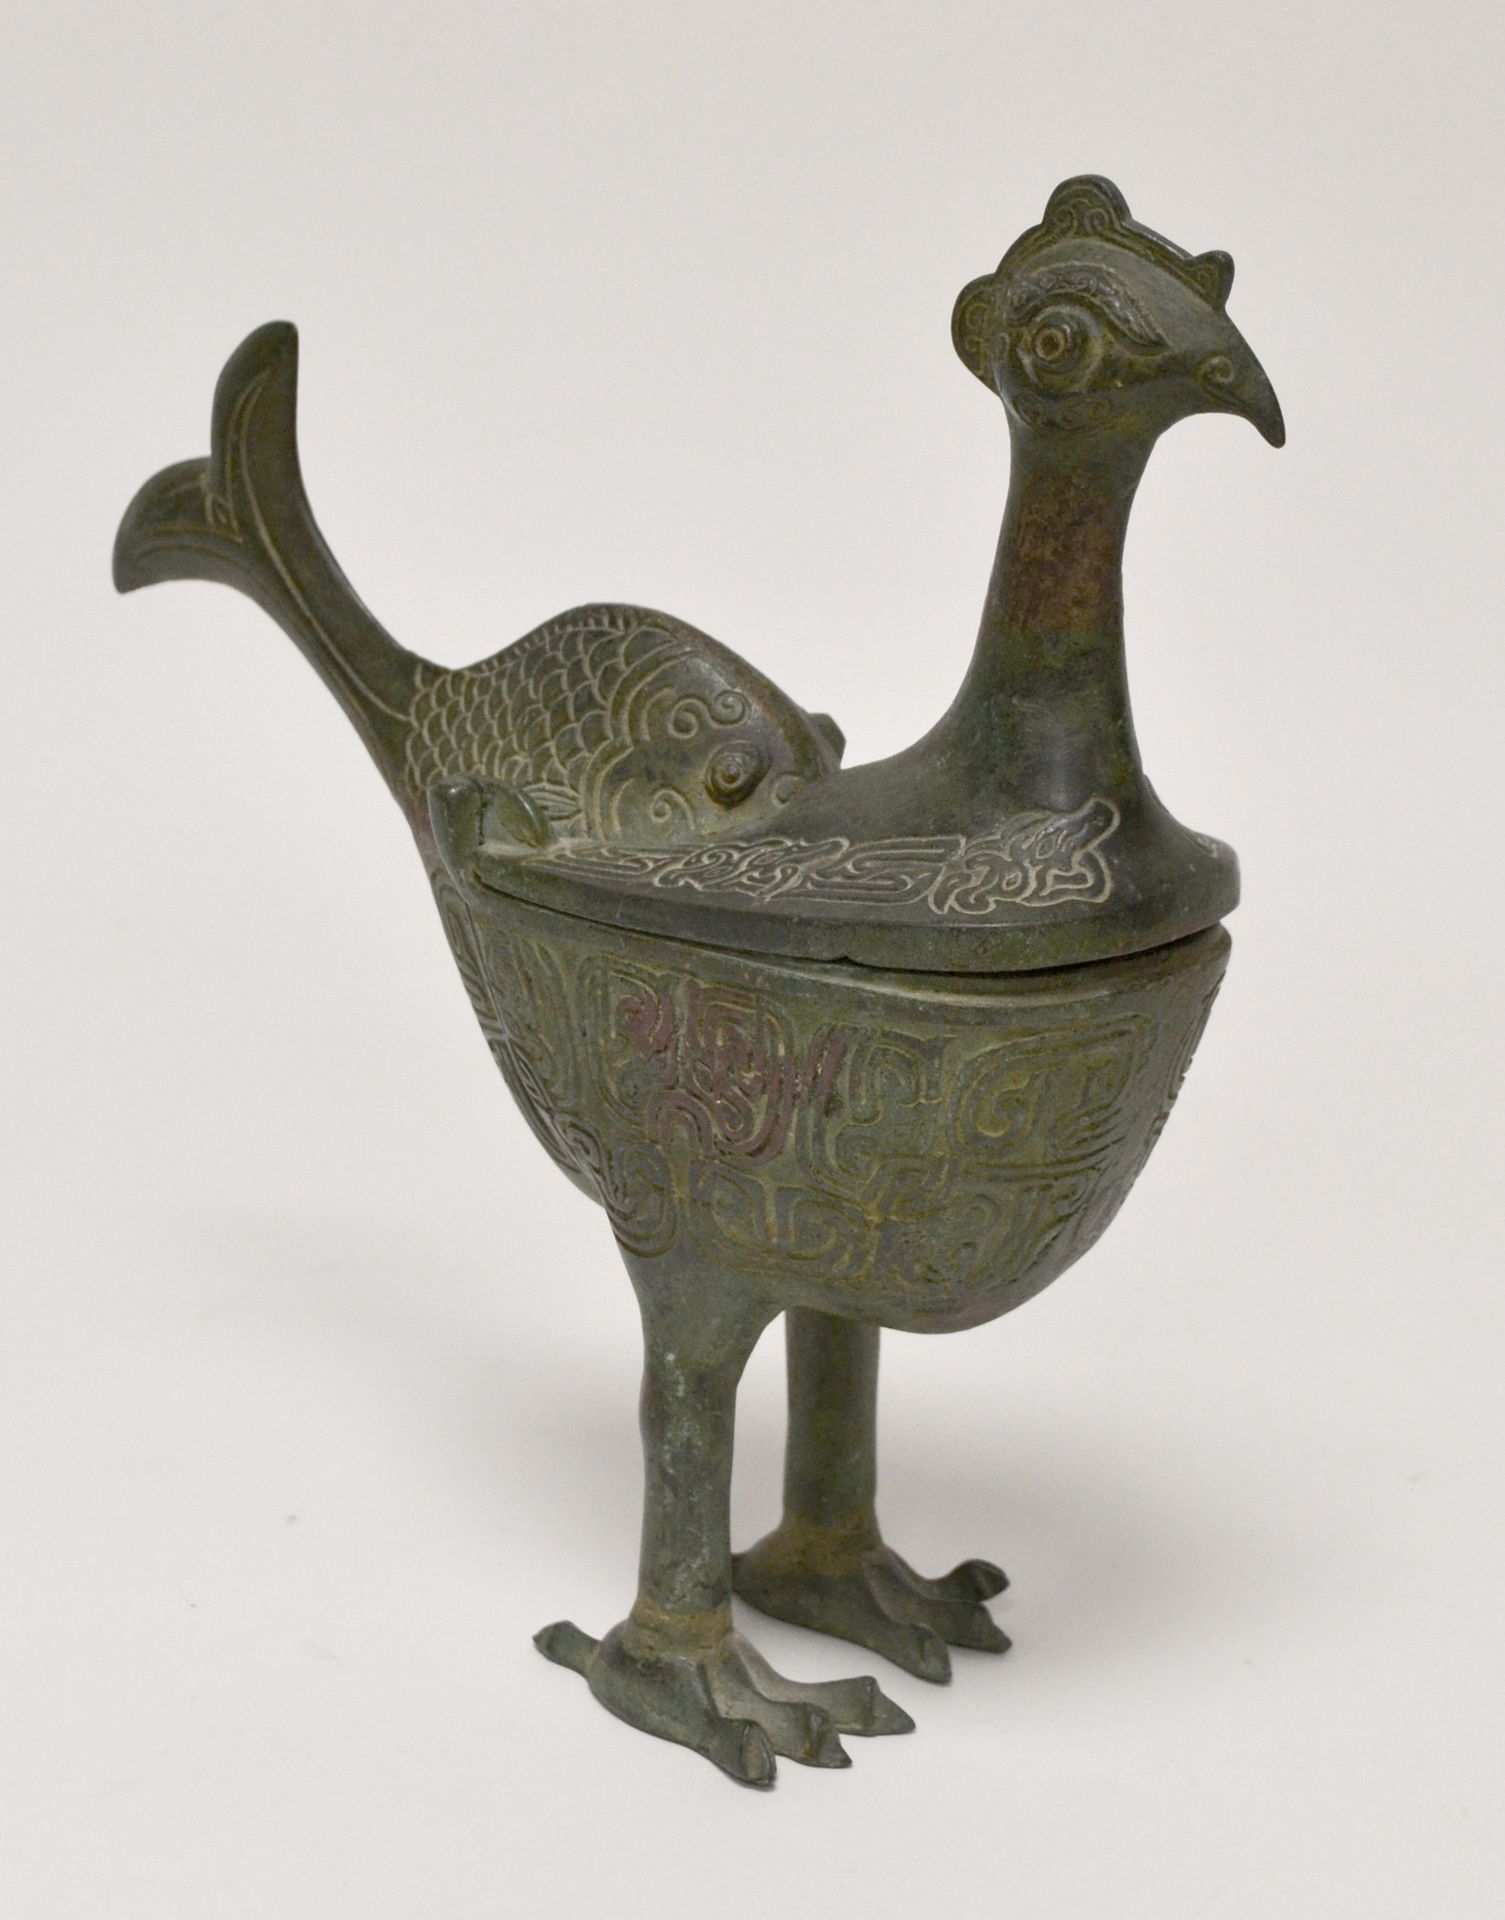 Null 中国。青铜烛台，母鸡造型，尾巴像鱼一样，上面刻有古代图案的装饰。活动盖子。高24厘米